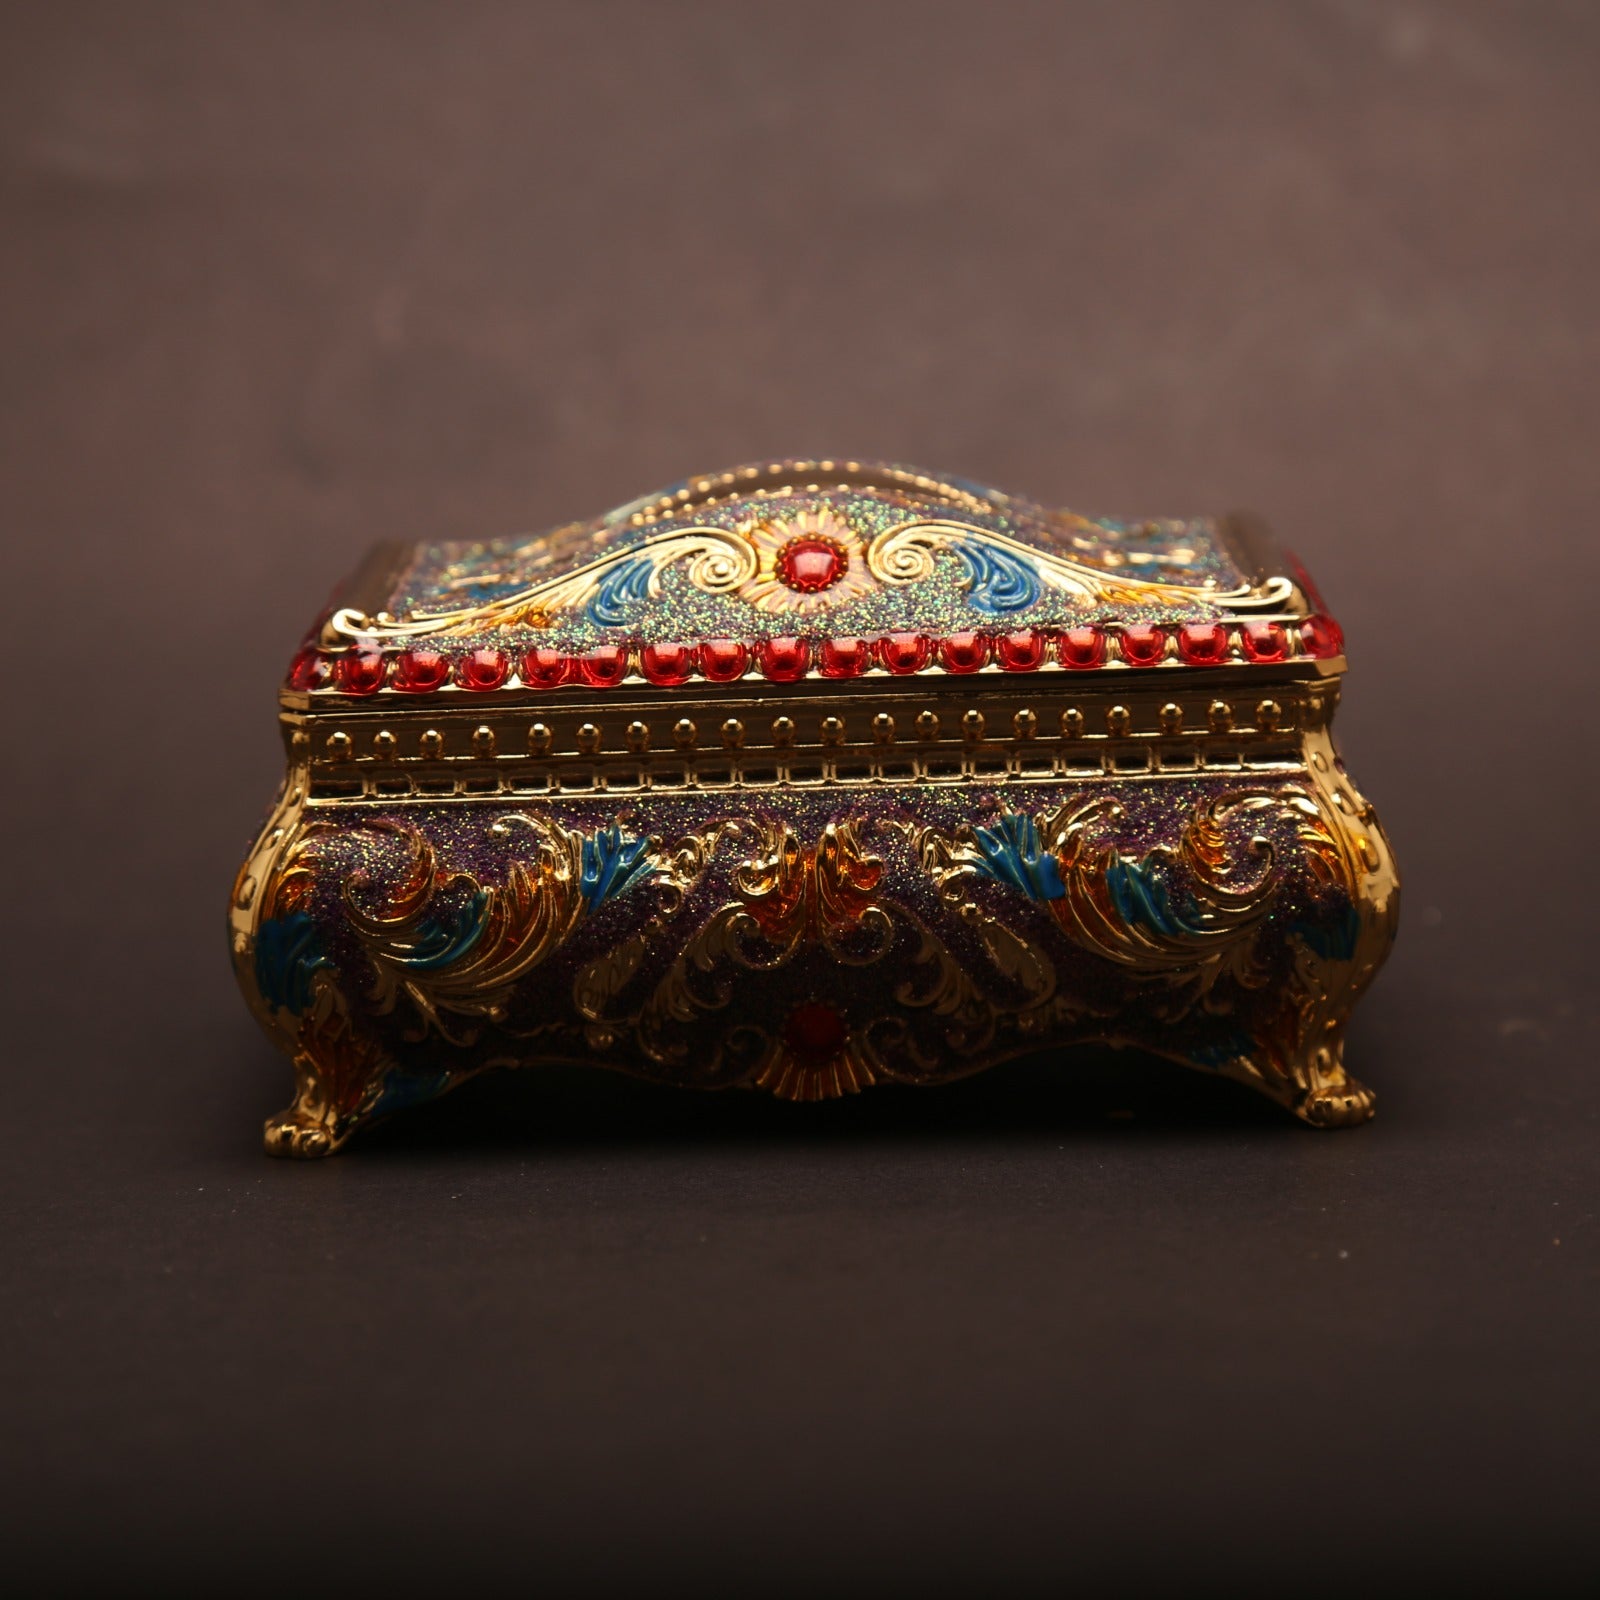 Pure Oudh Wood 10gm with Royal Aladdin Gift Box